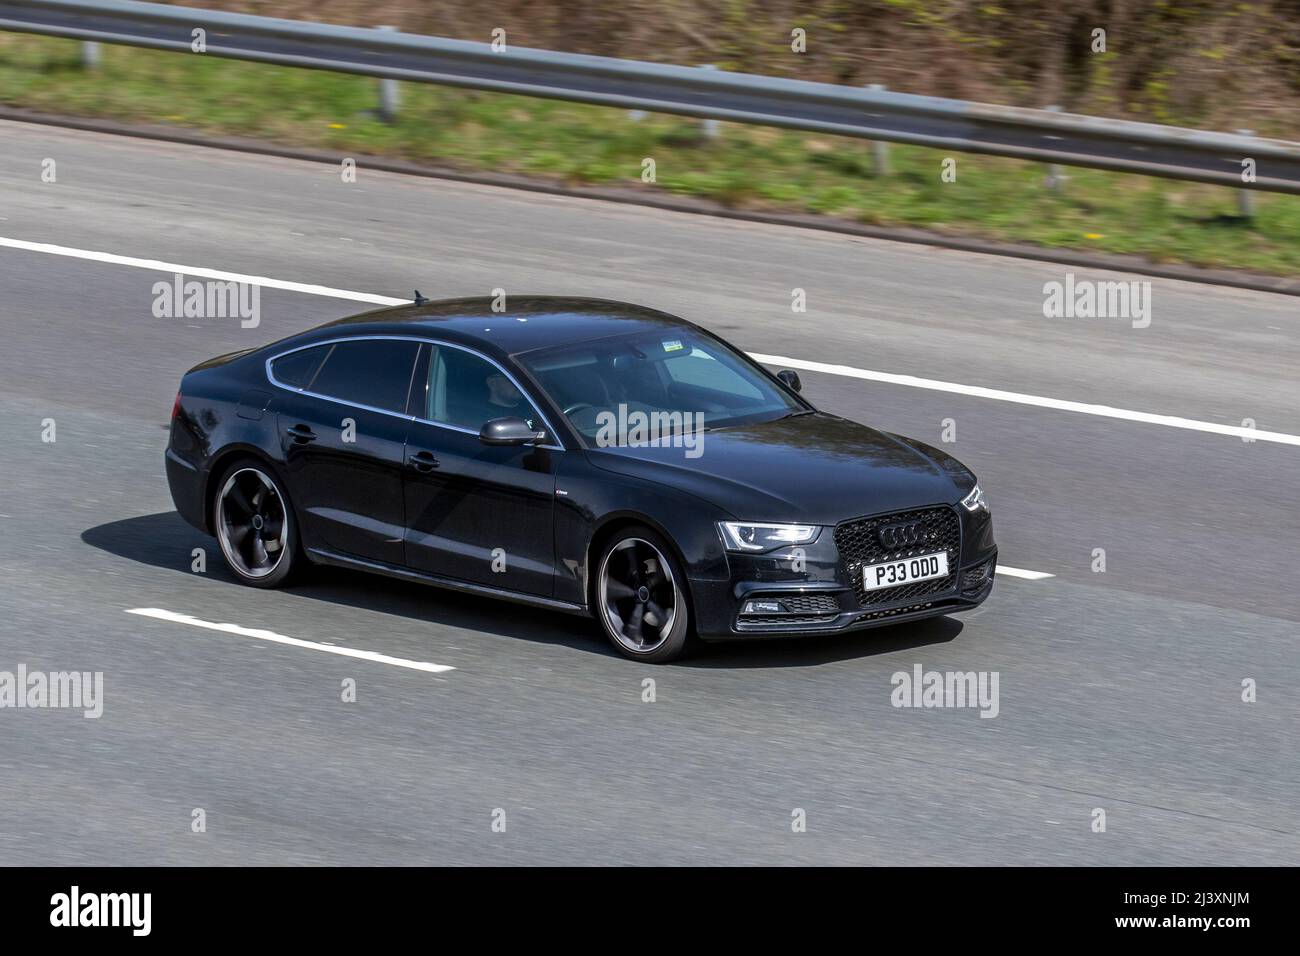 Photos Tuning 2014 Abt AS5 Dark (based on Audi A5 sportback) Black